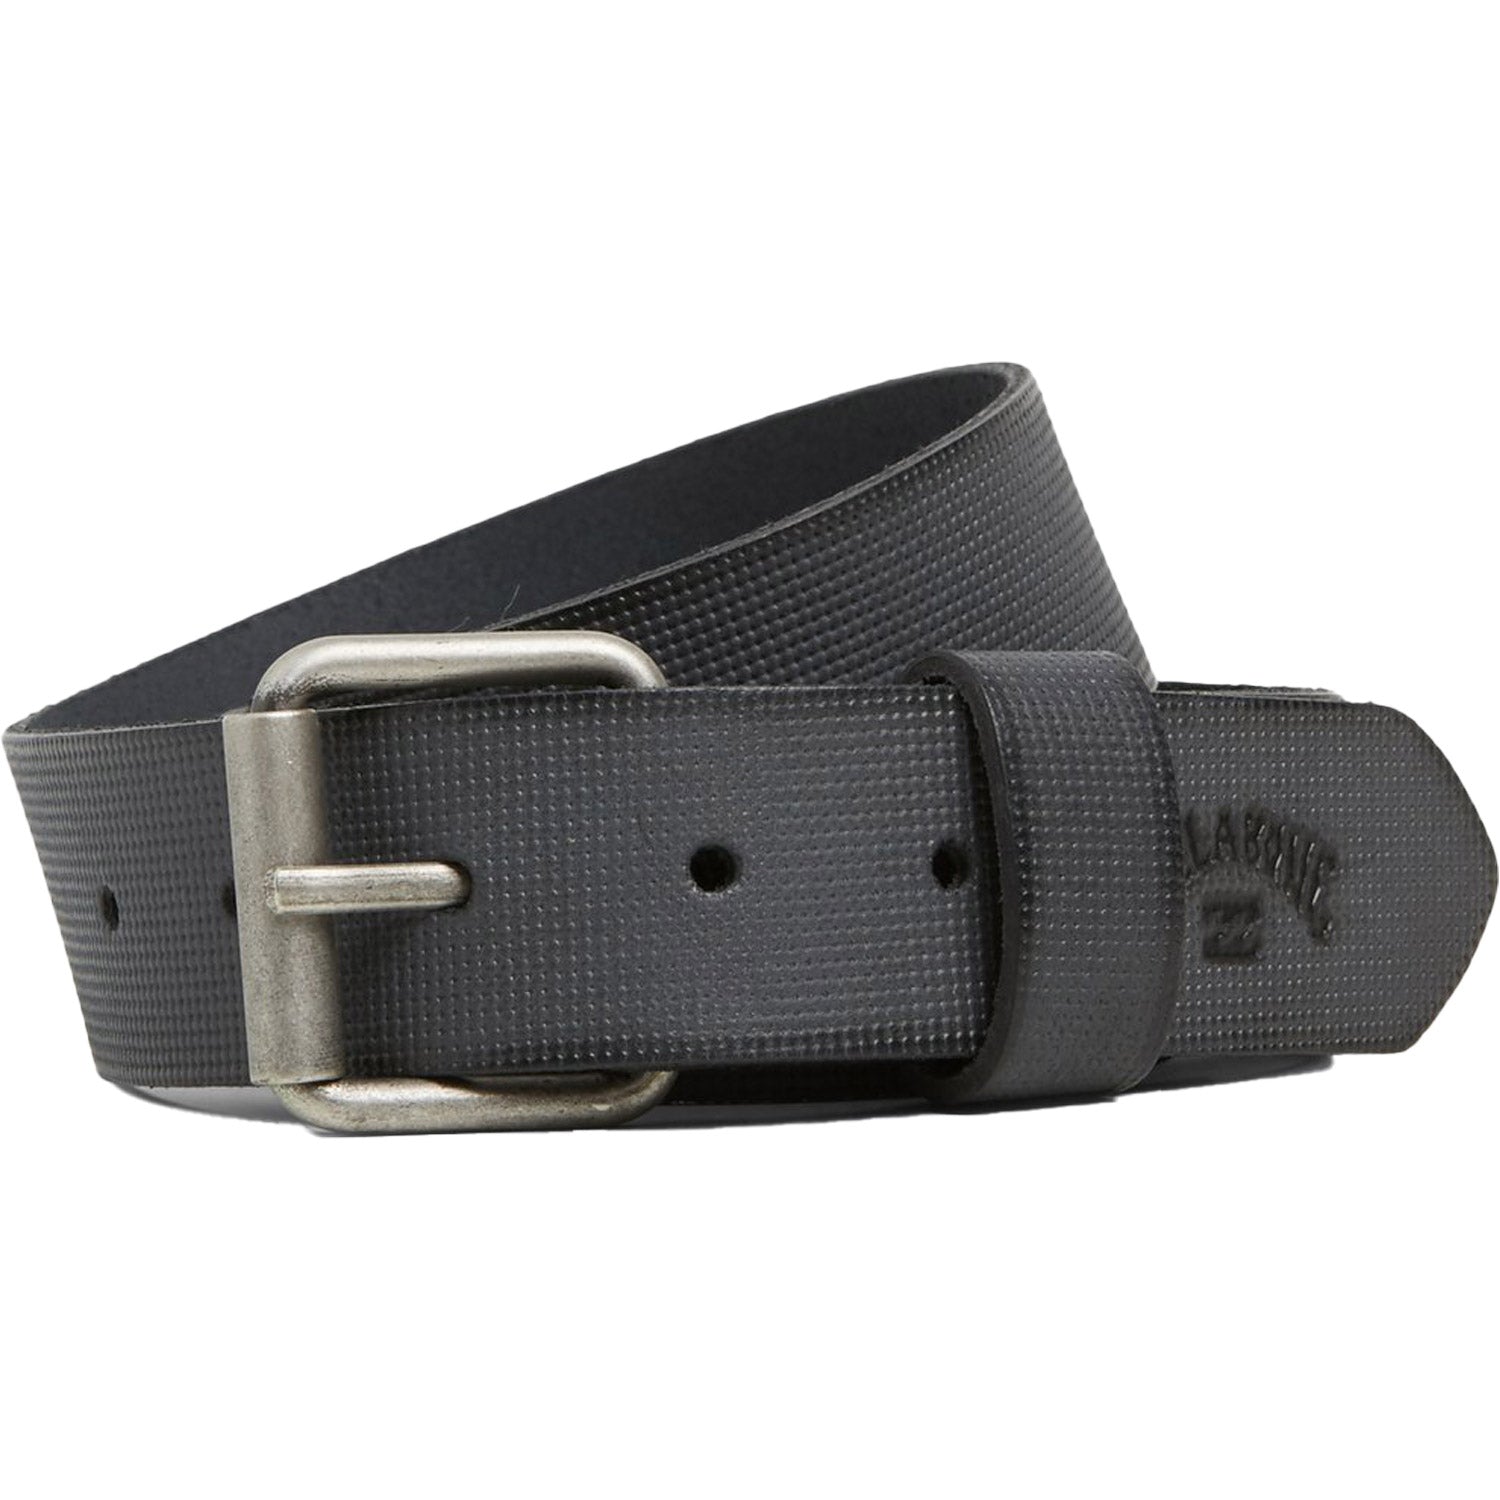 Billabong Daily Leather Belt Black